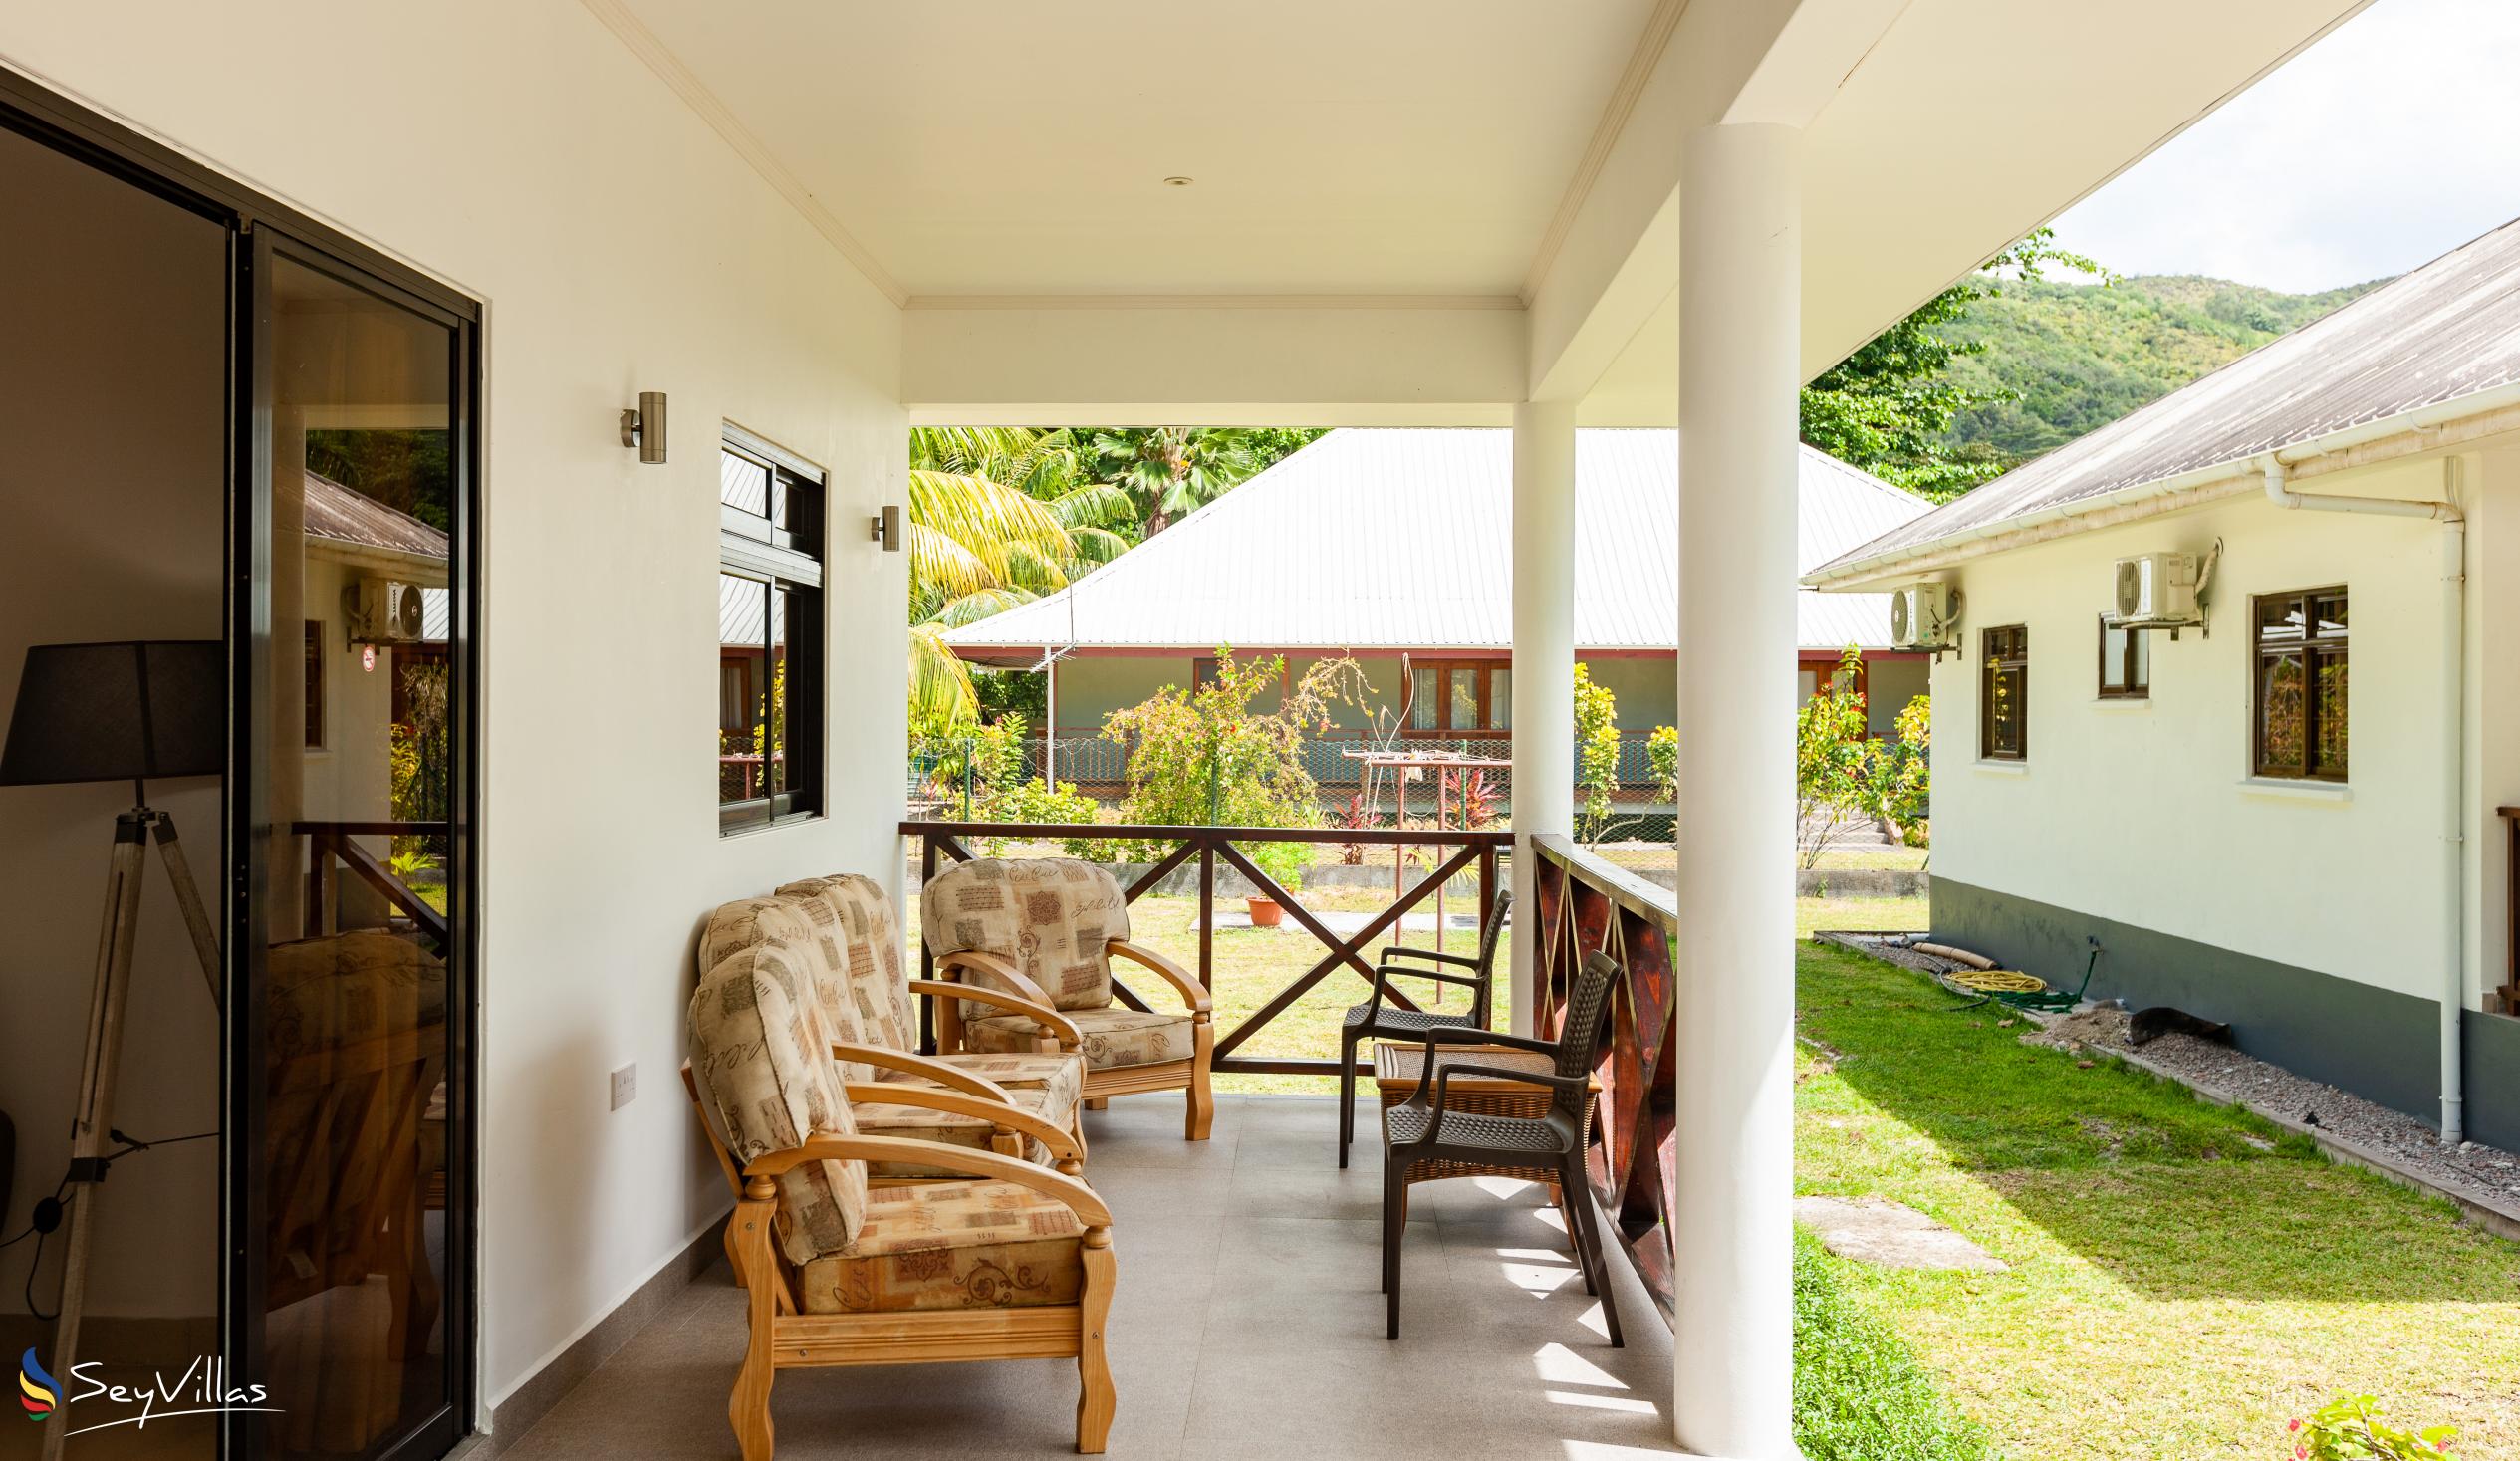 Foto 54: Villa Laure - Villa Lil - Praslin (Seychellen)